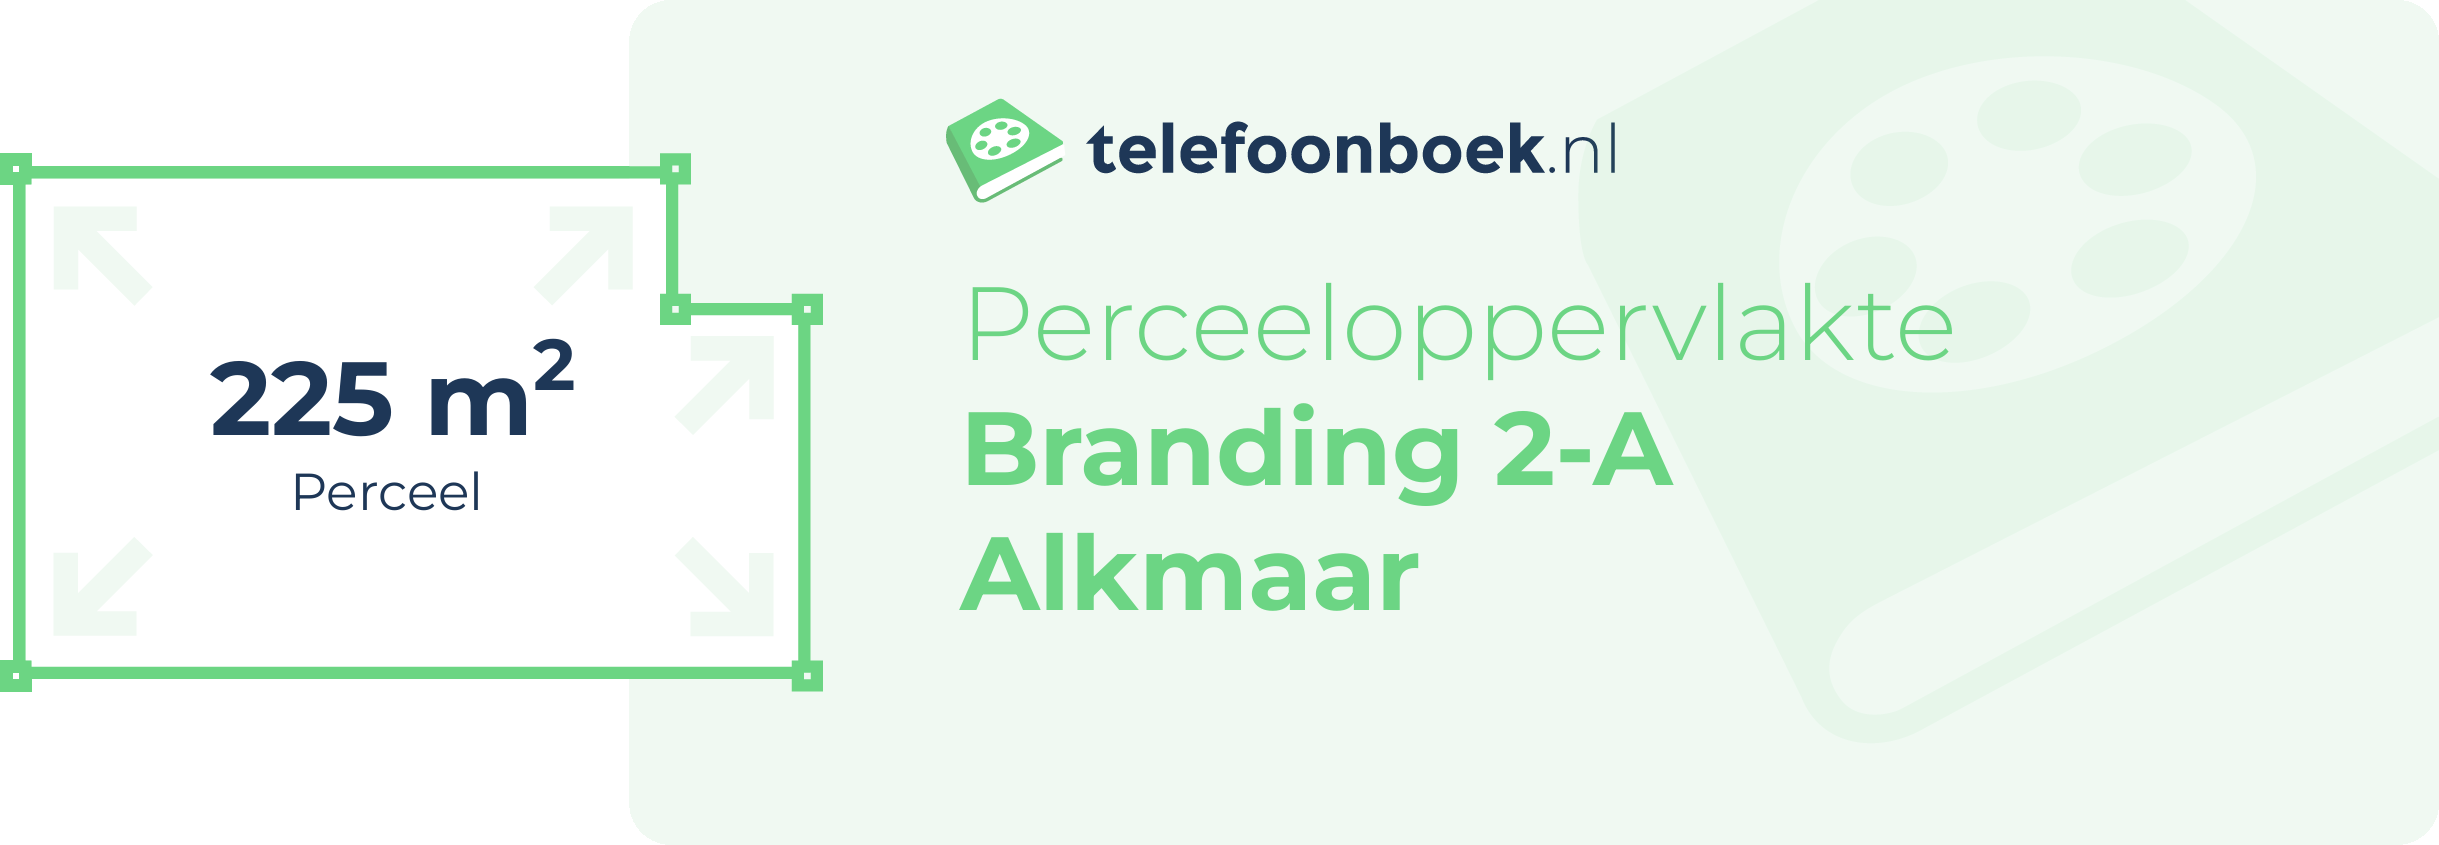 Perceeloppervlakte Branding 2-A Alkmaar